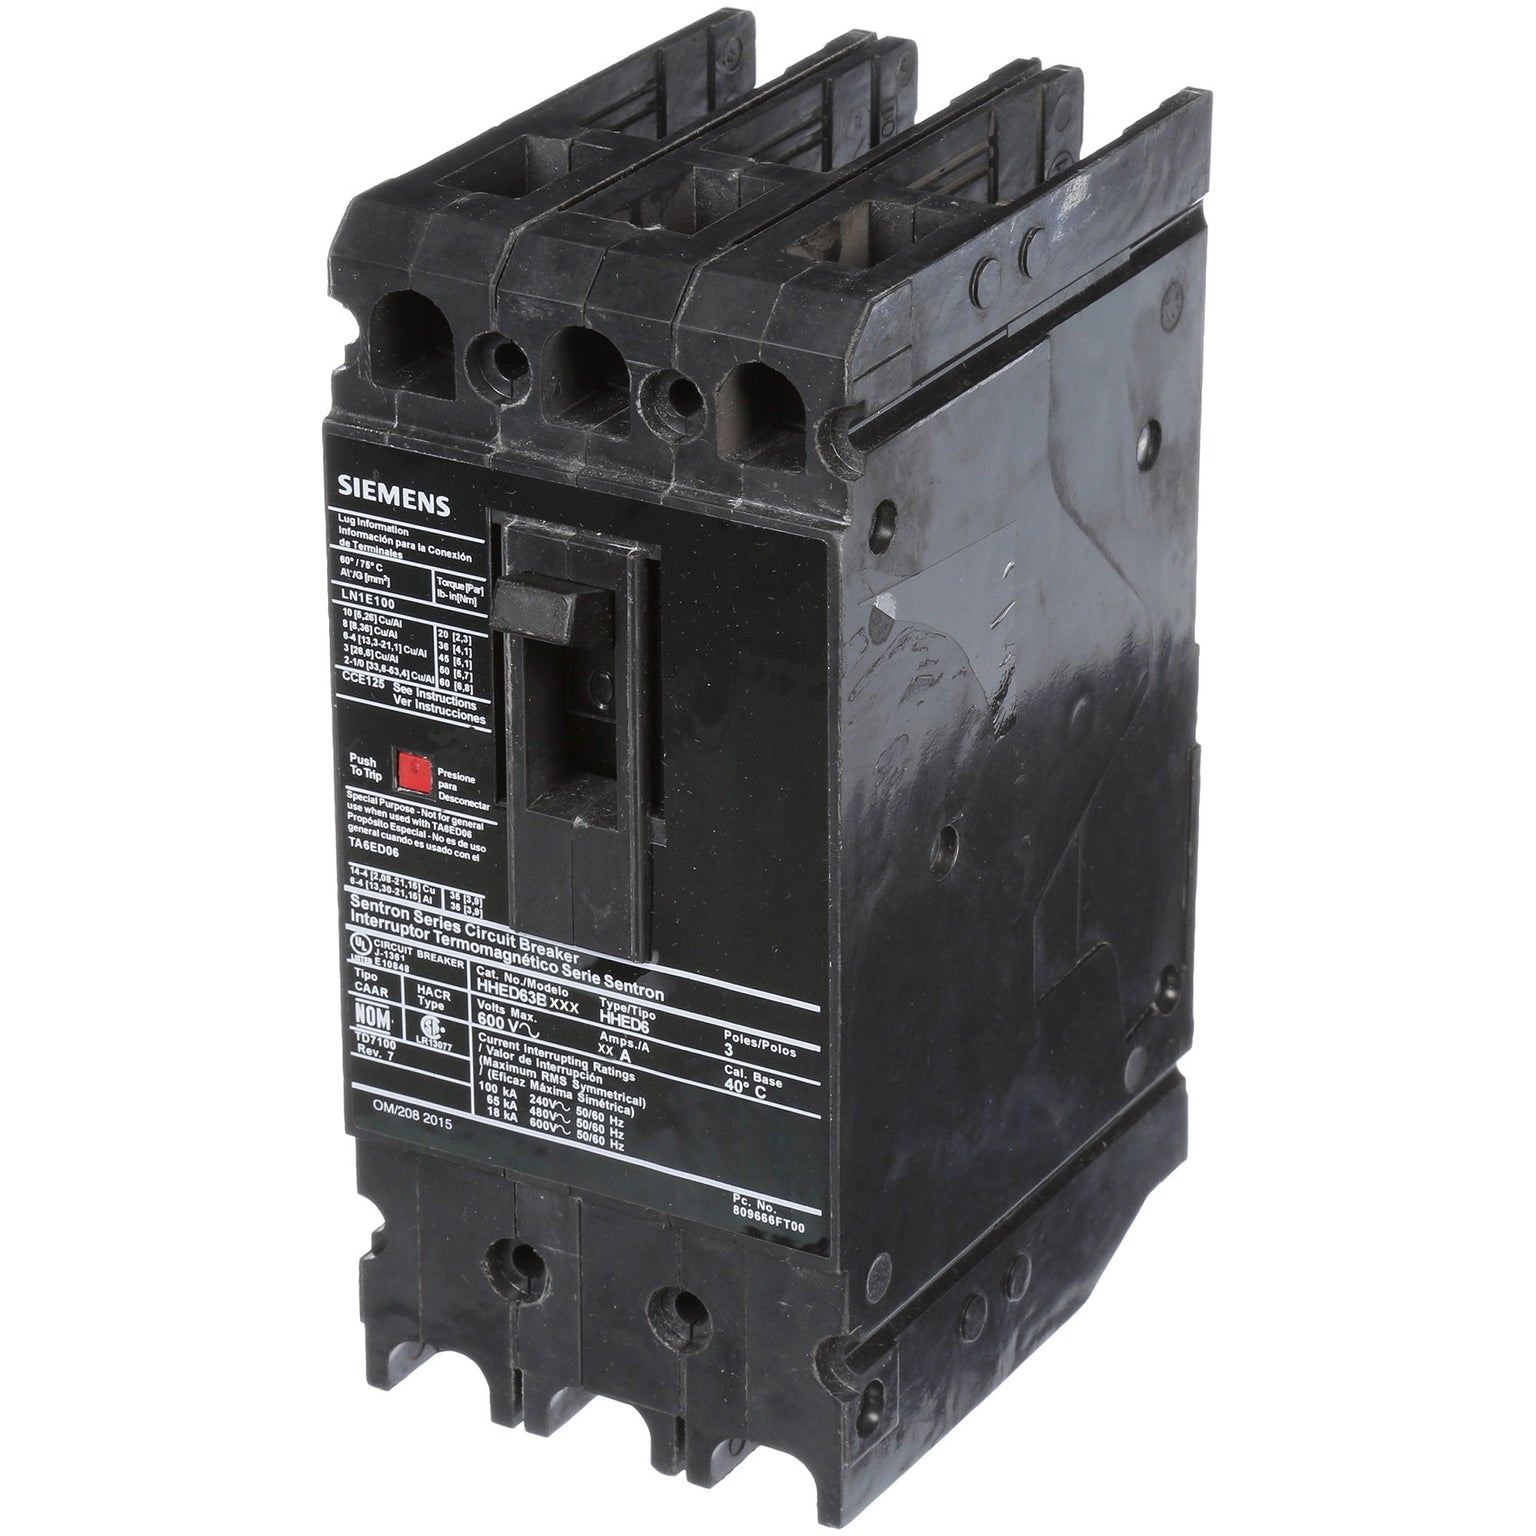 HHED63B040L - Siemens - 40 Amp Molded Case Circuit Breaker